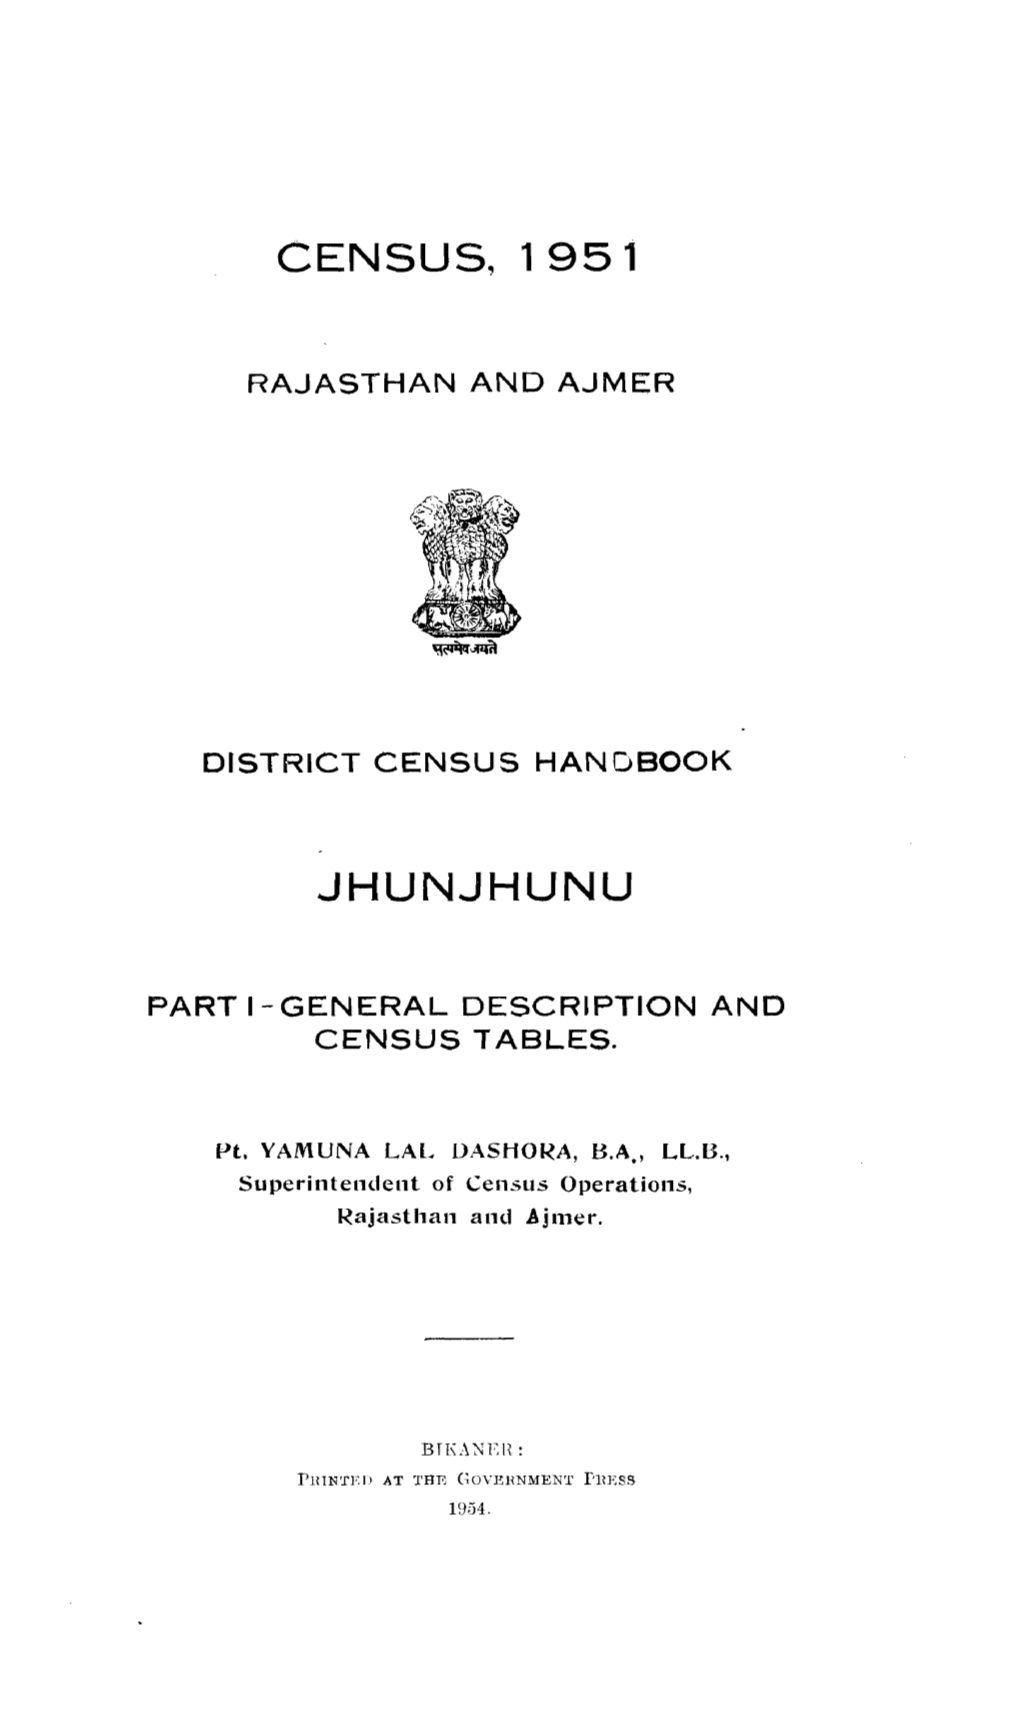 District Census Handbook, 7-Jhunjhunu, Part I, Rajasthan And